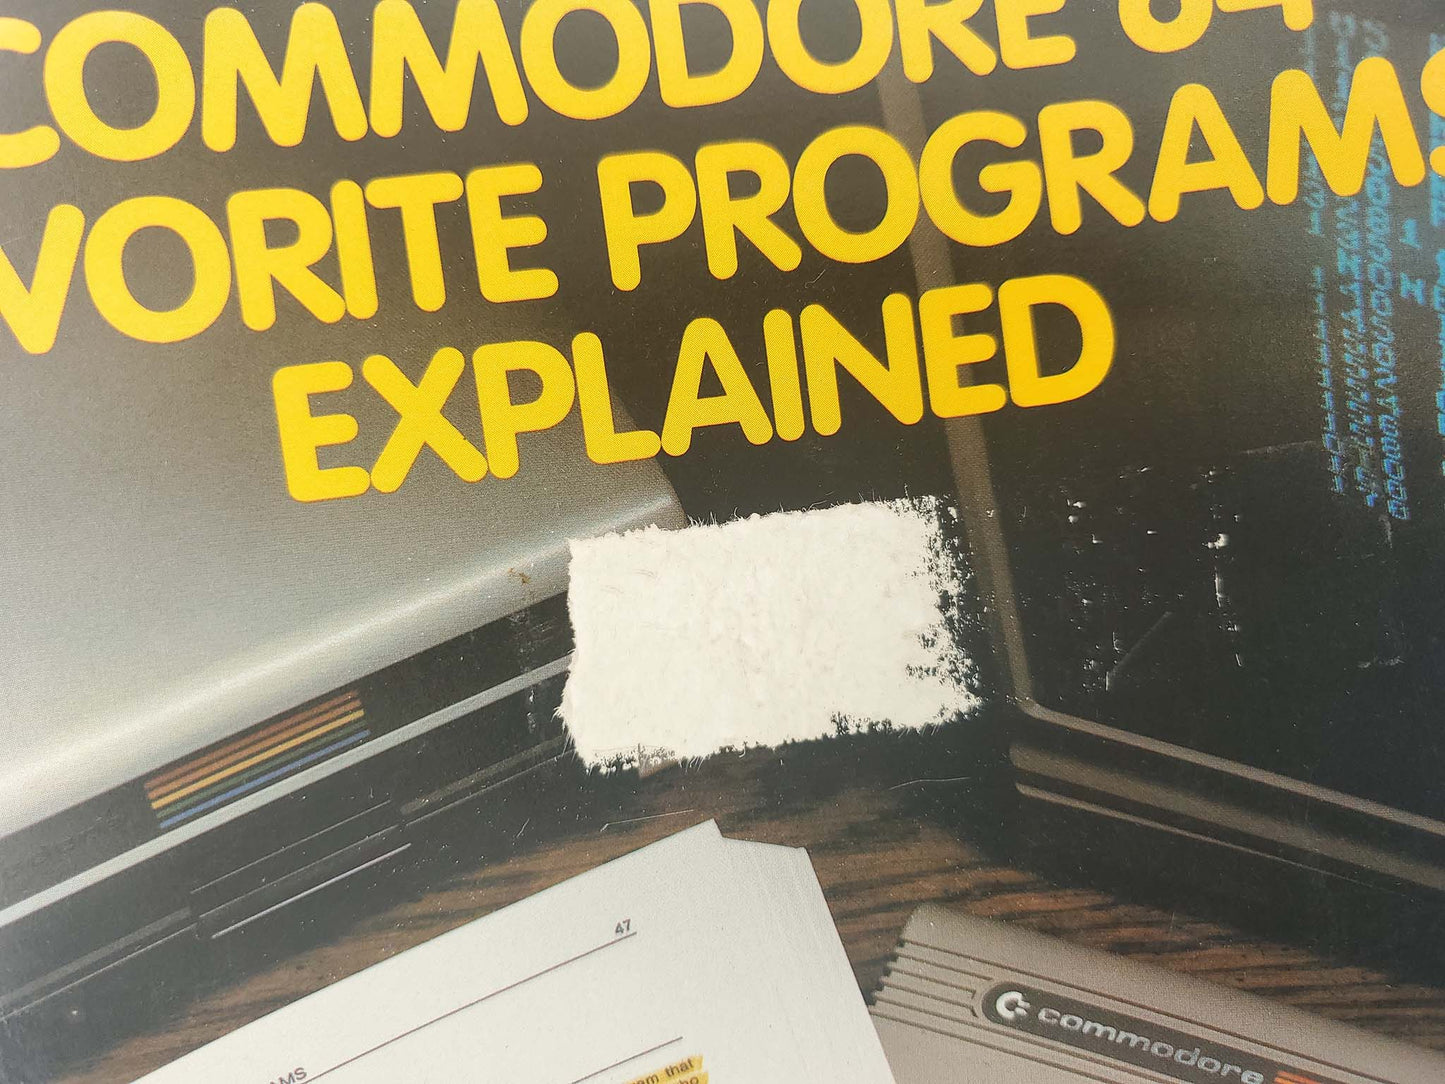 Commodore 64 Favorite Programs Explained